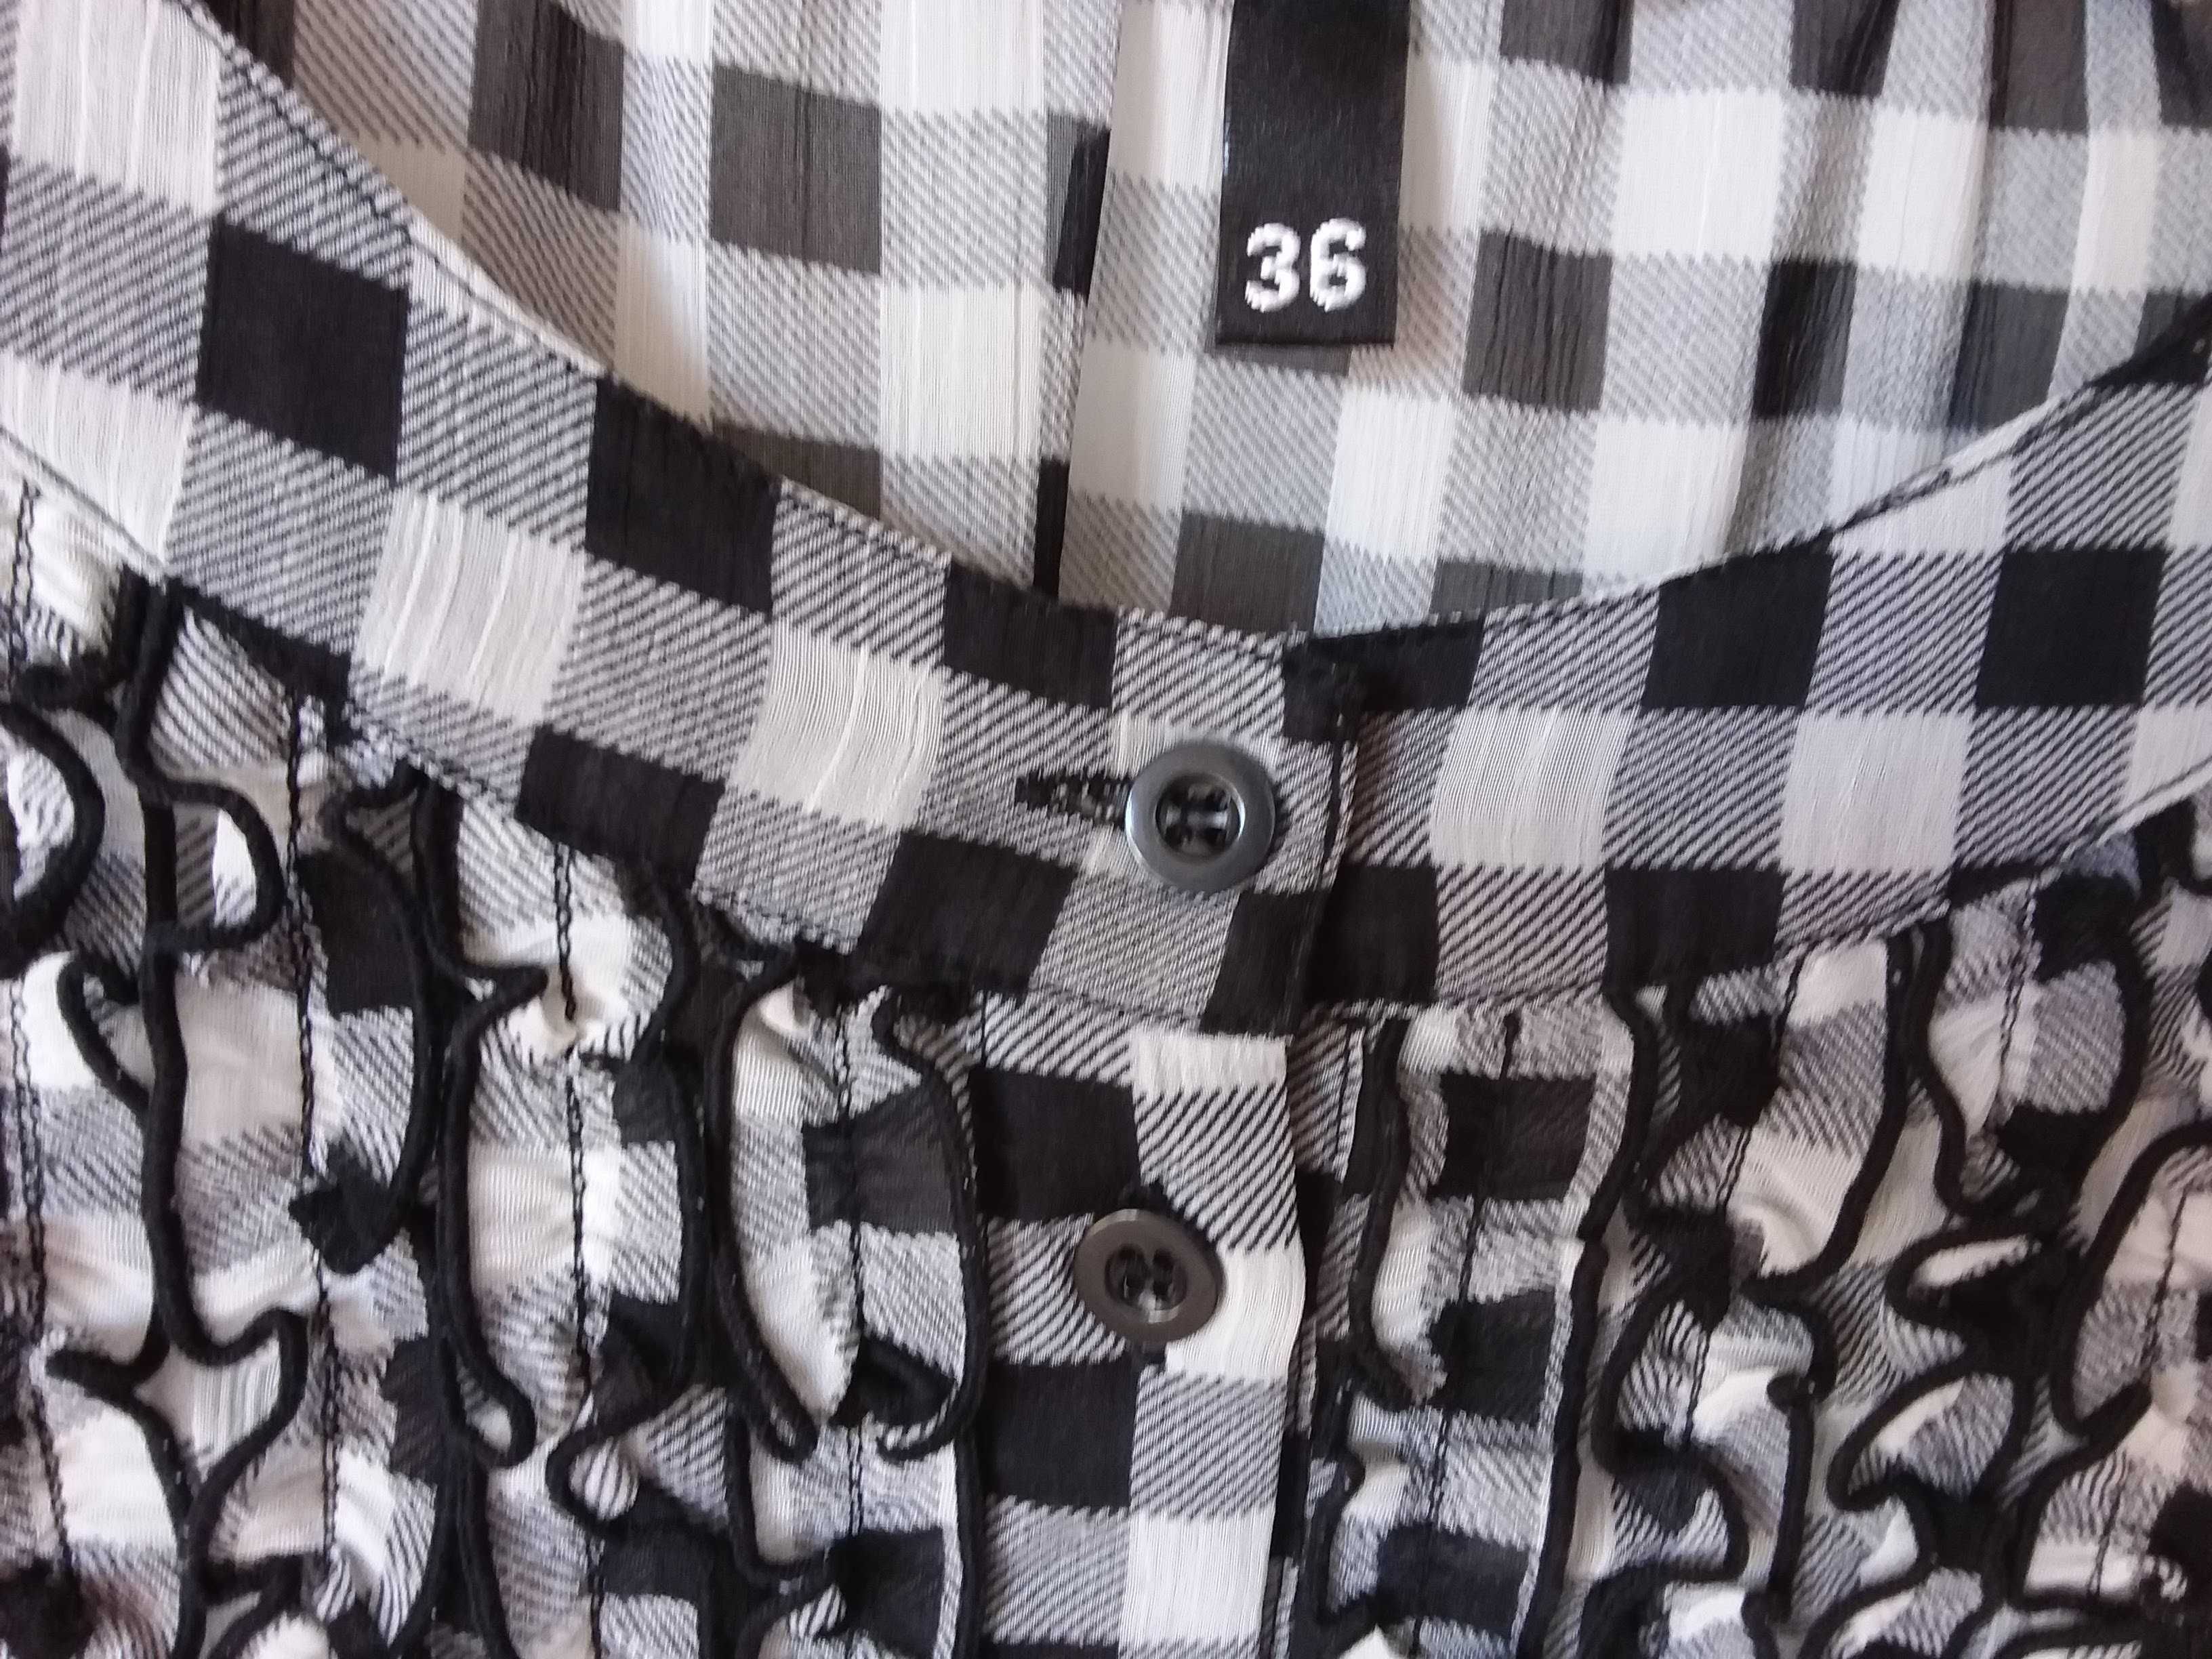 Camisa xadrez, marca H&M, preto e branco, tamanho S (36)